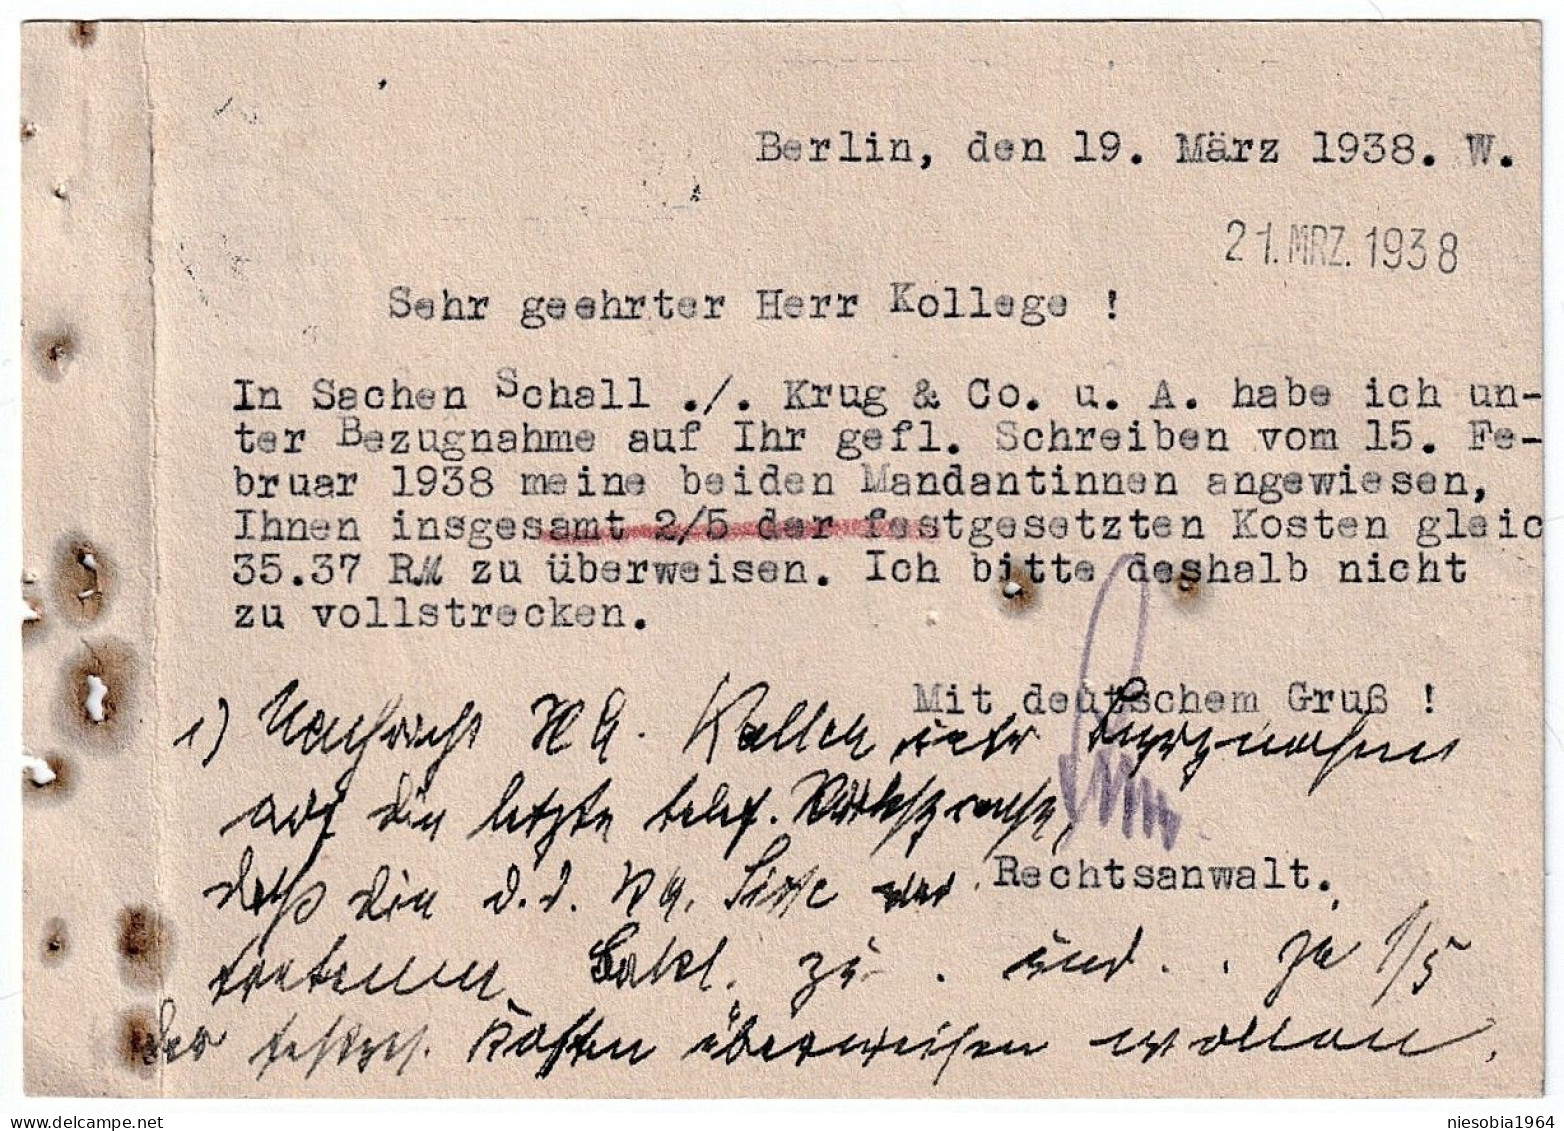 Berlin Willy Sitte Notar - Member Of NSRB -19.03.1938 Company Postcard / Firmenpostkarte - Postcards